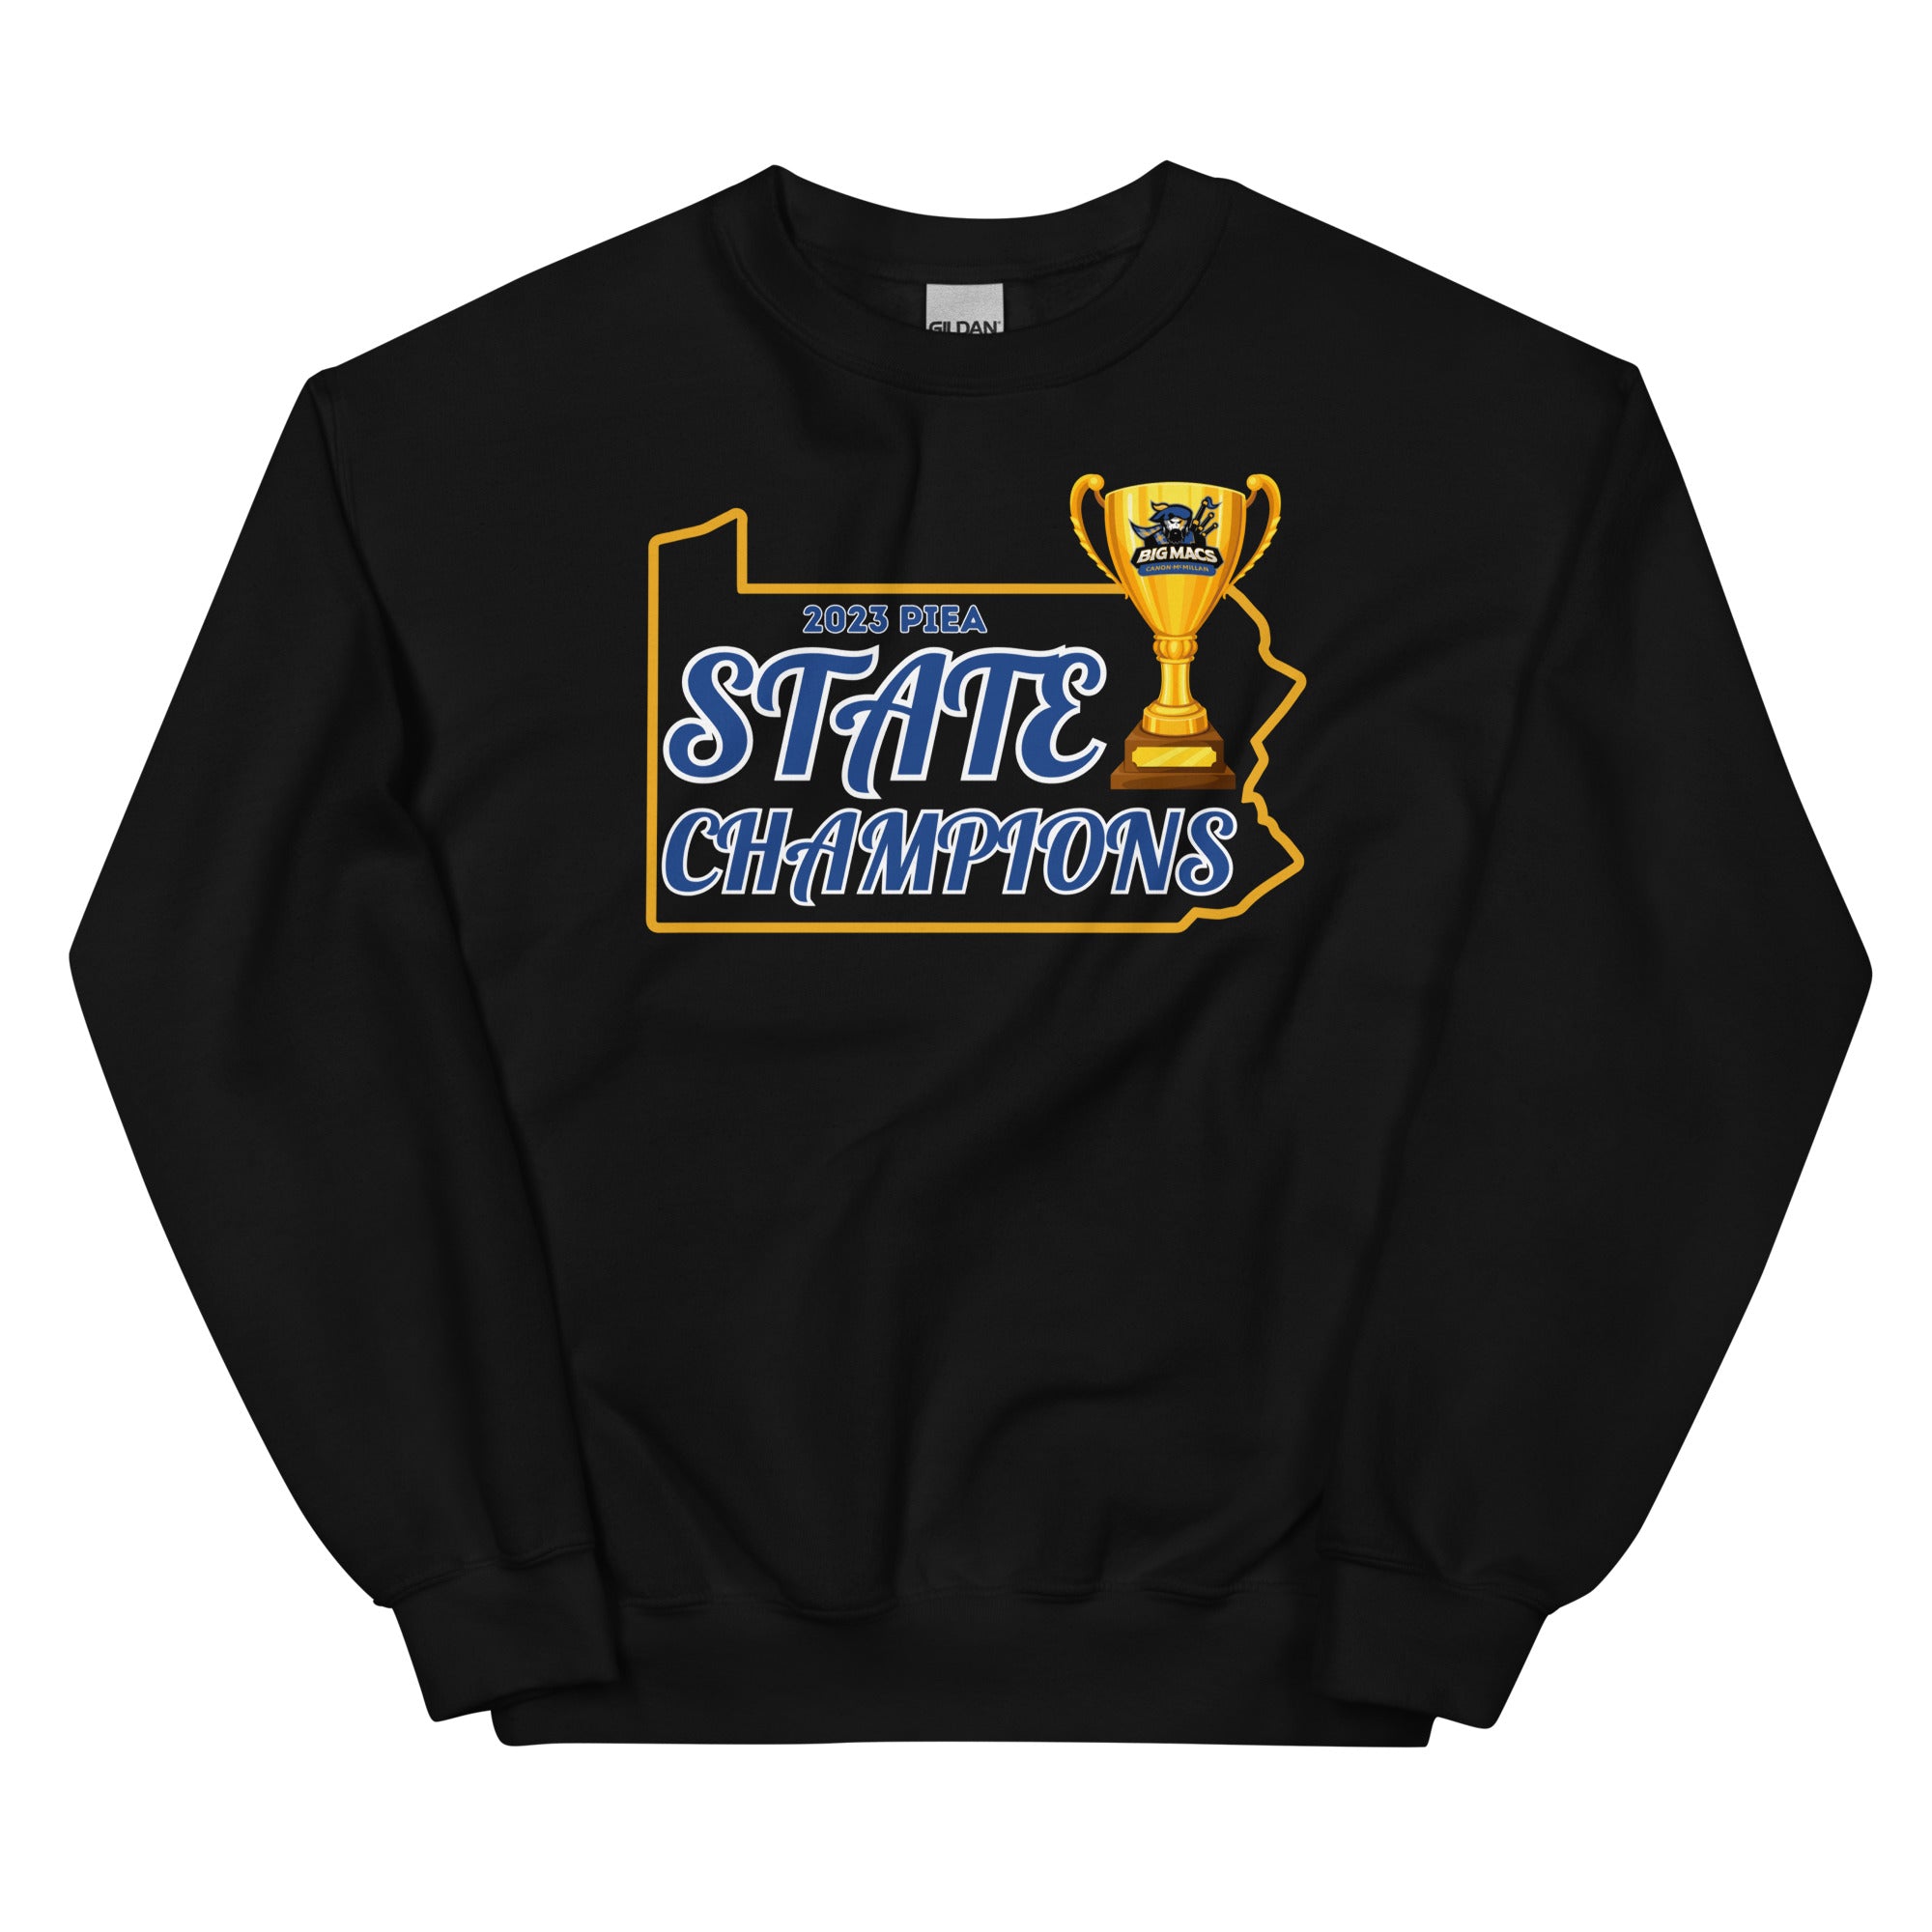 2023 PIEA State Champion Sweatshirt